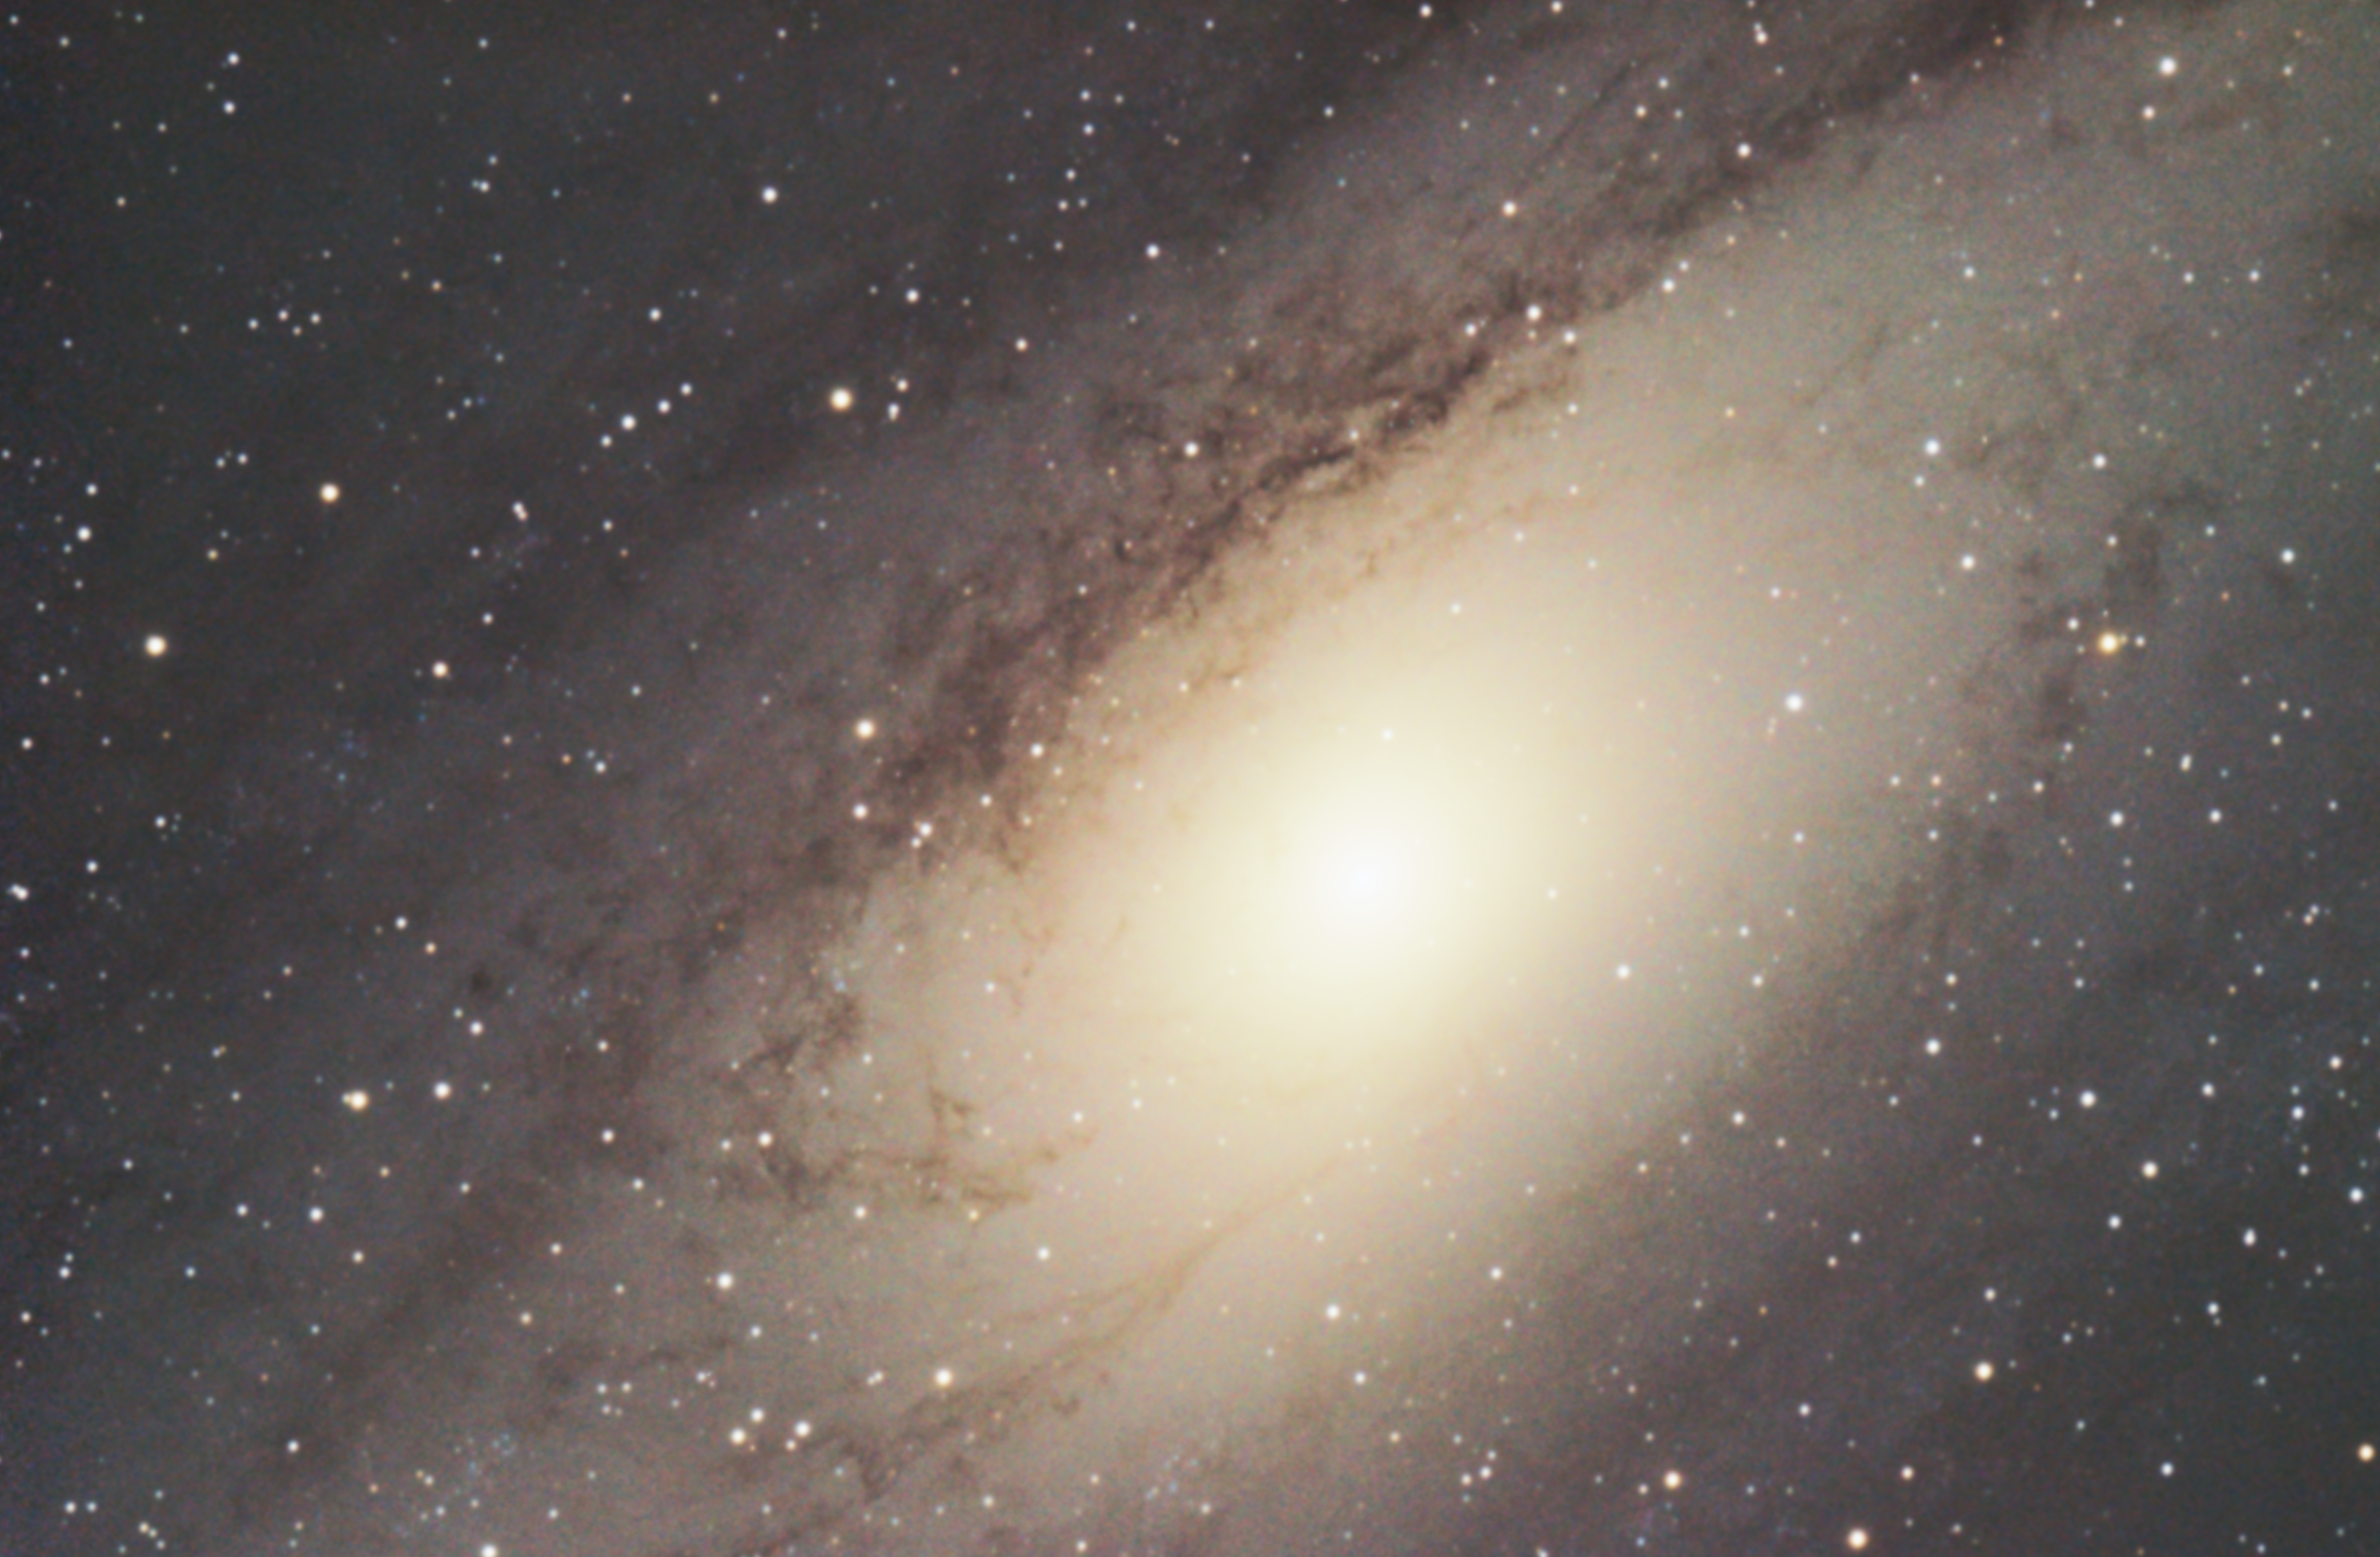 M31 - Andromeda galaxy (centre)